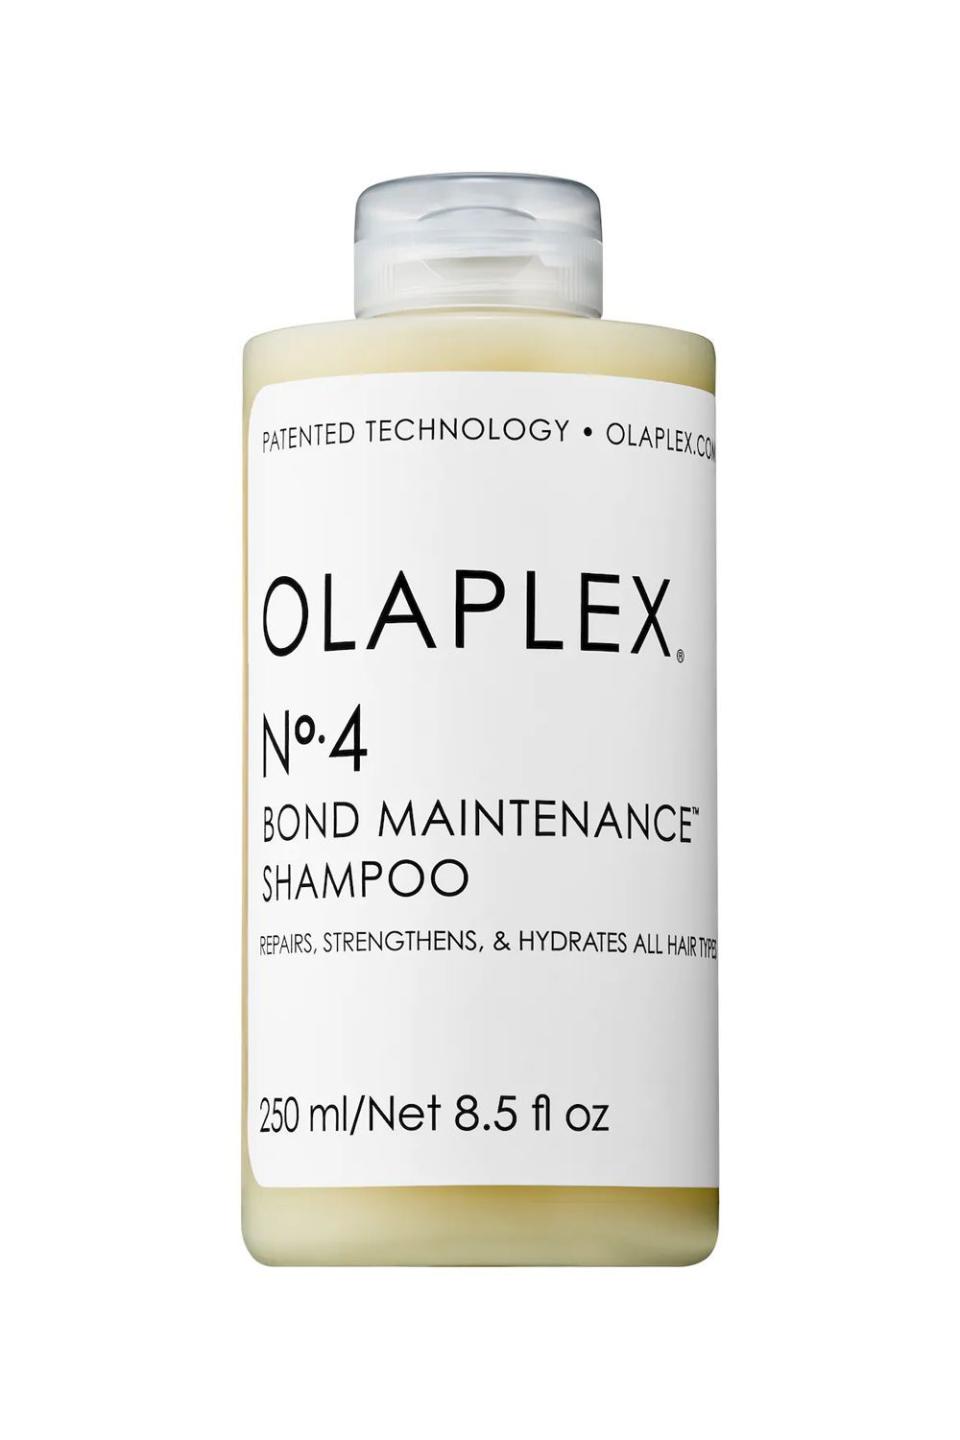 6) Olaplex No. 4 Bond Maintenance Shampoo